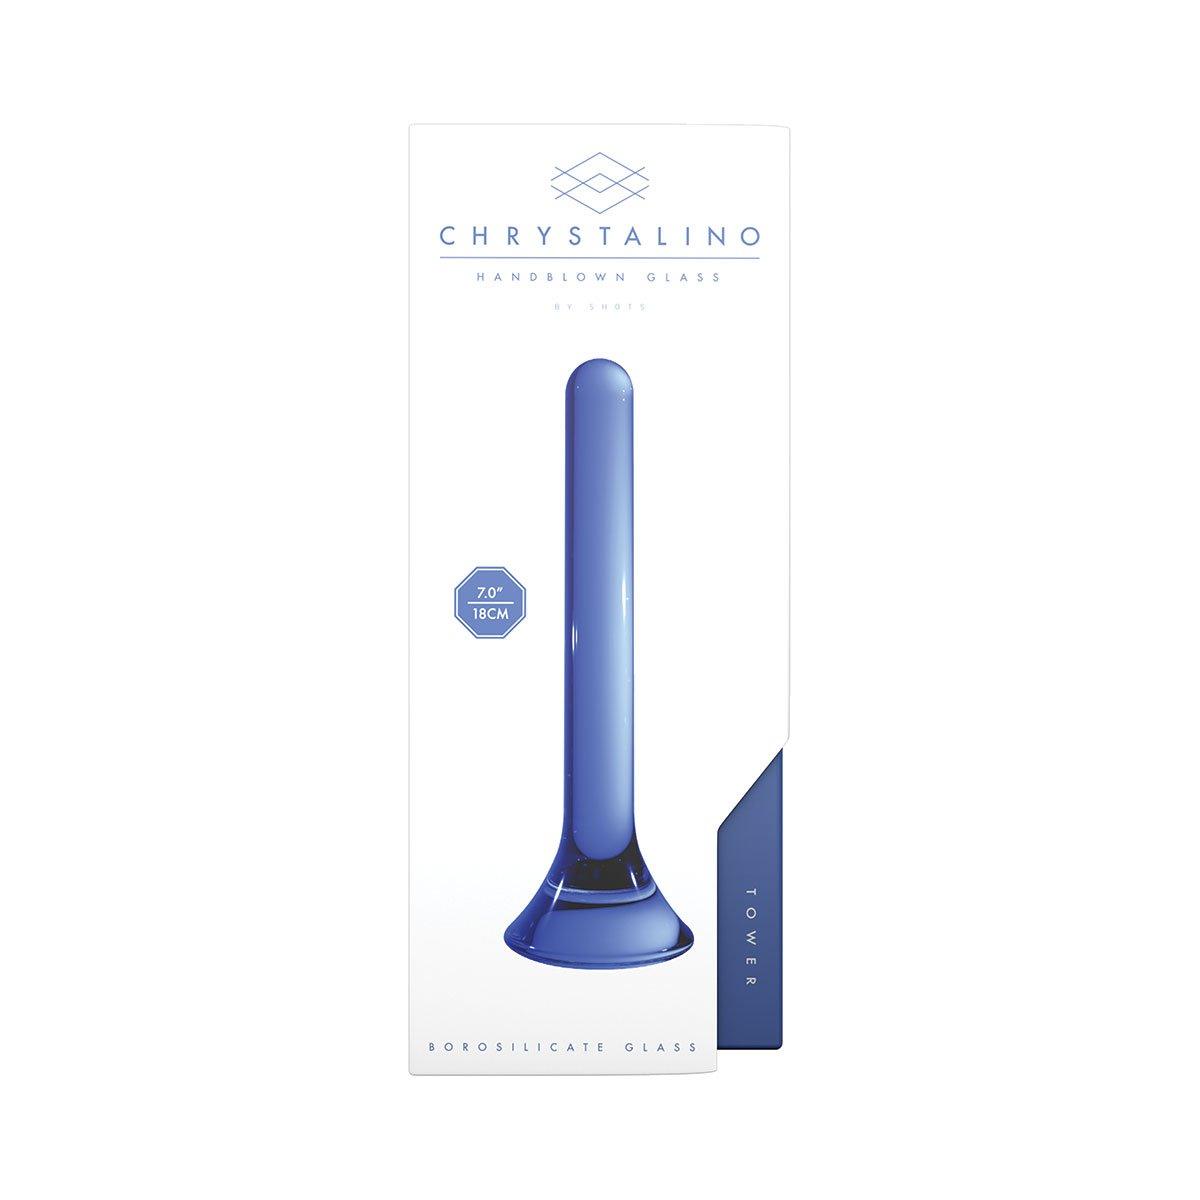 Steel Blue Chrystalino Tower - Blue